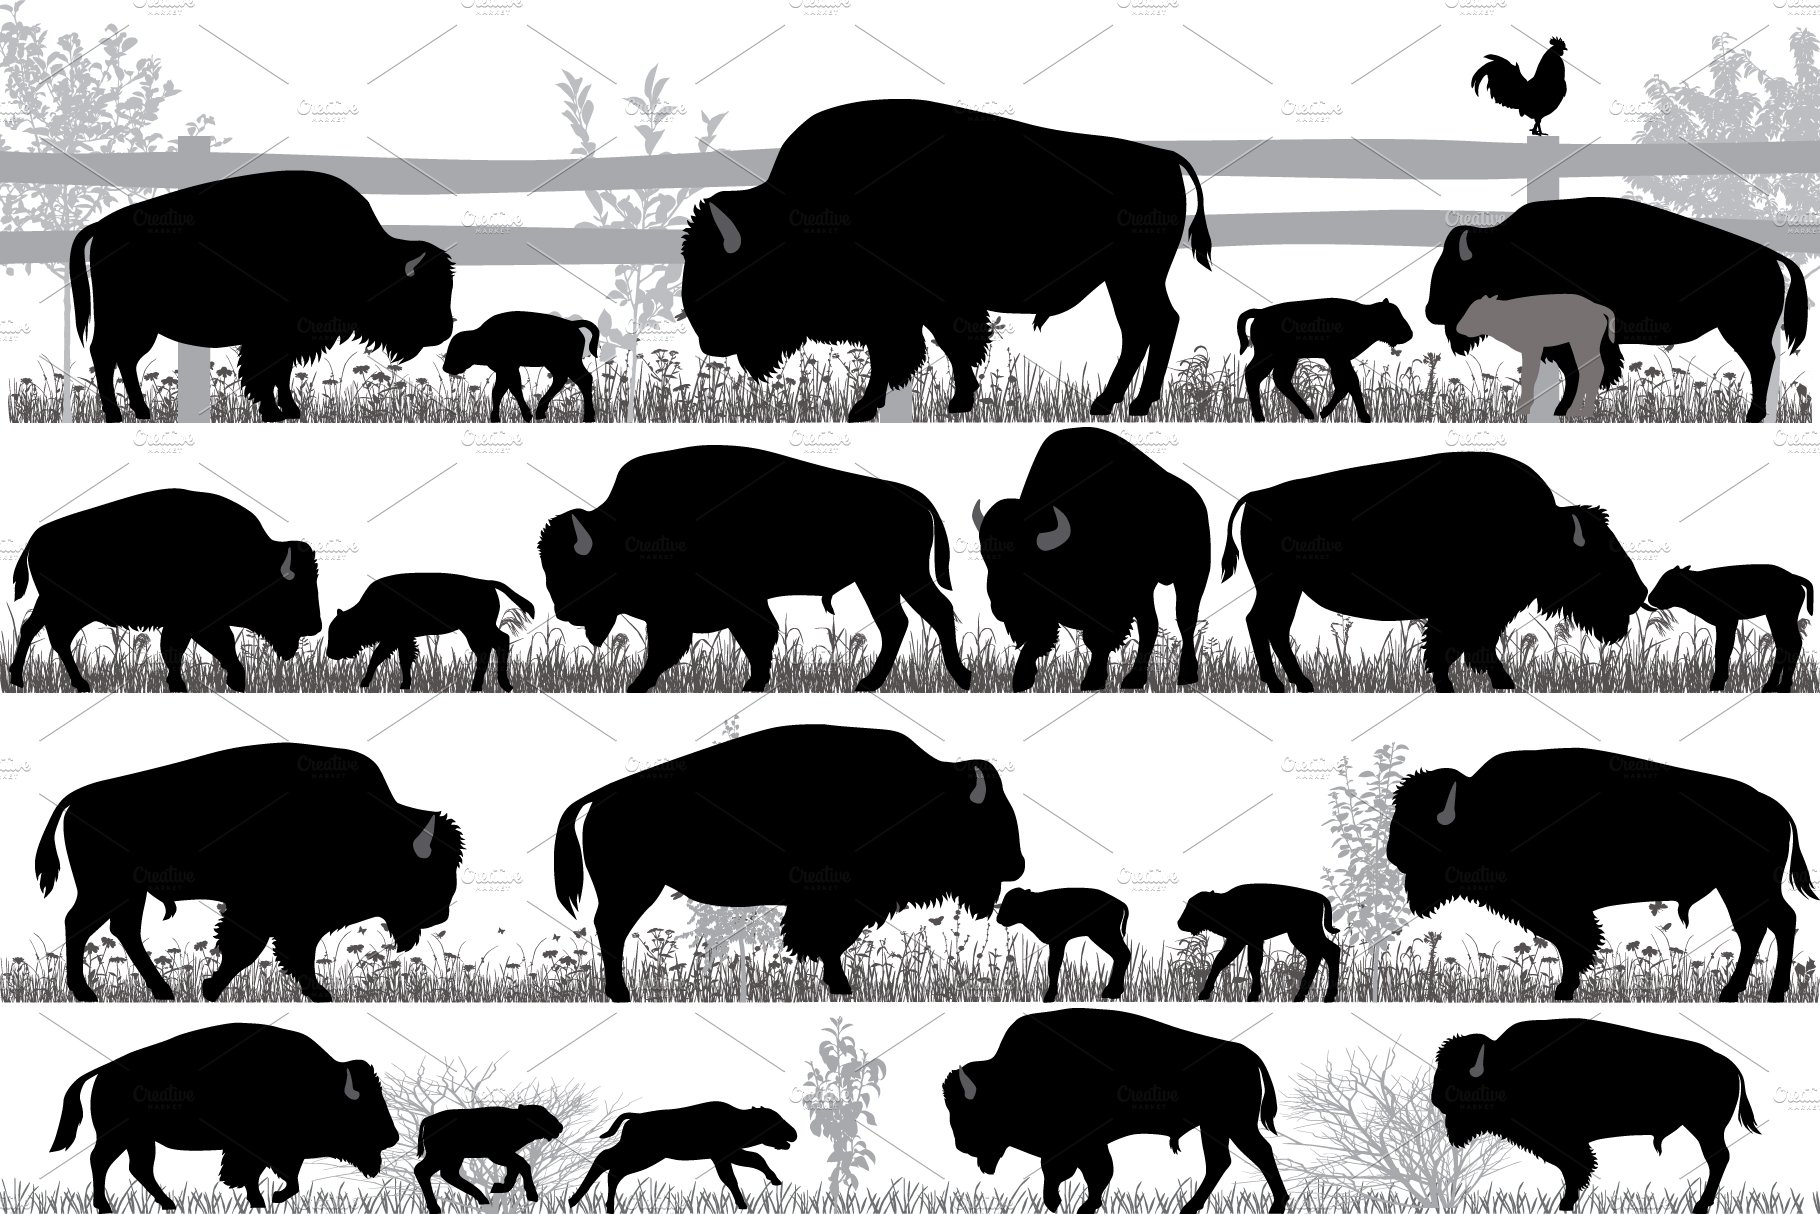 American bison buffalo cover image.